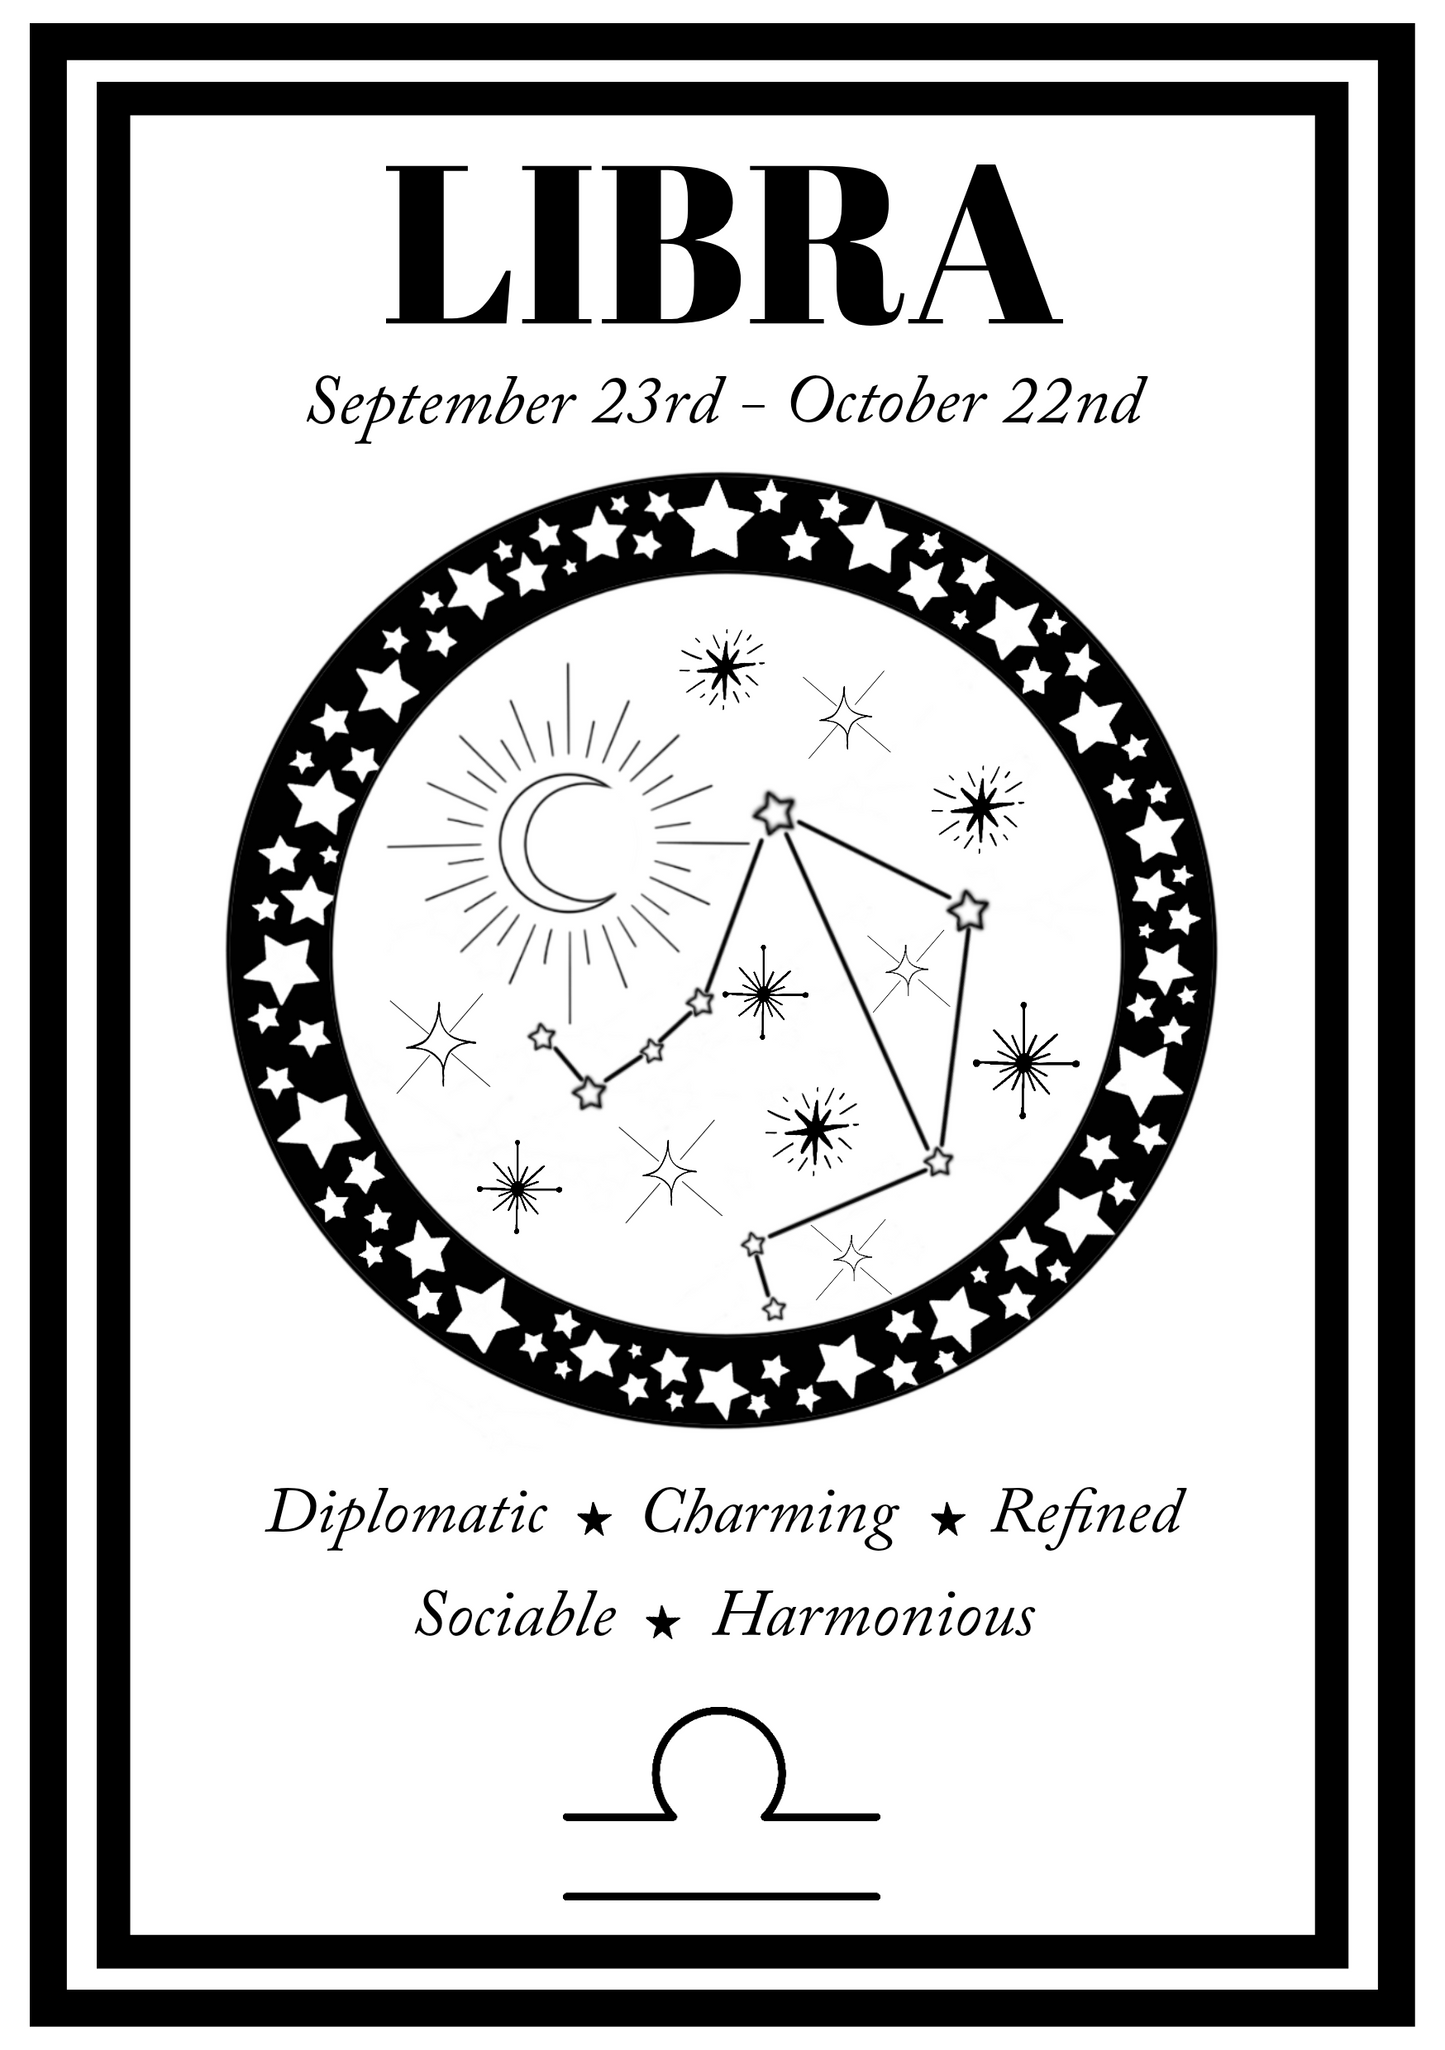 Zodiac Constellation Print